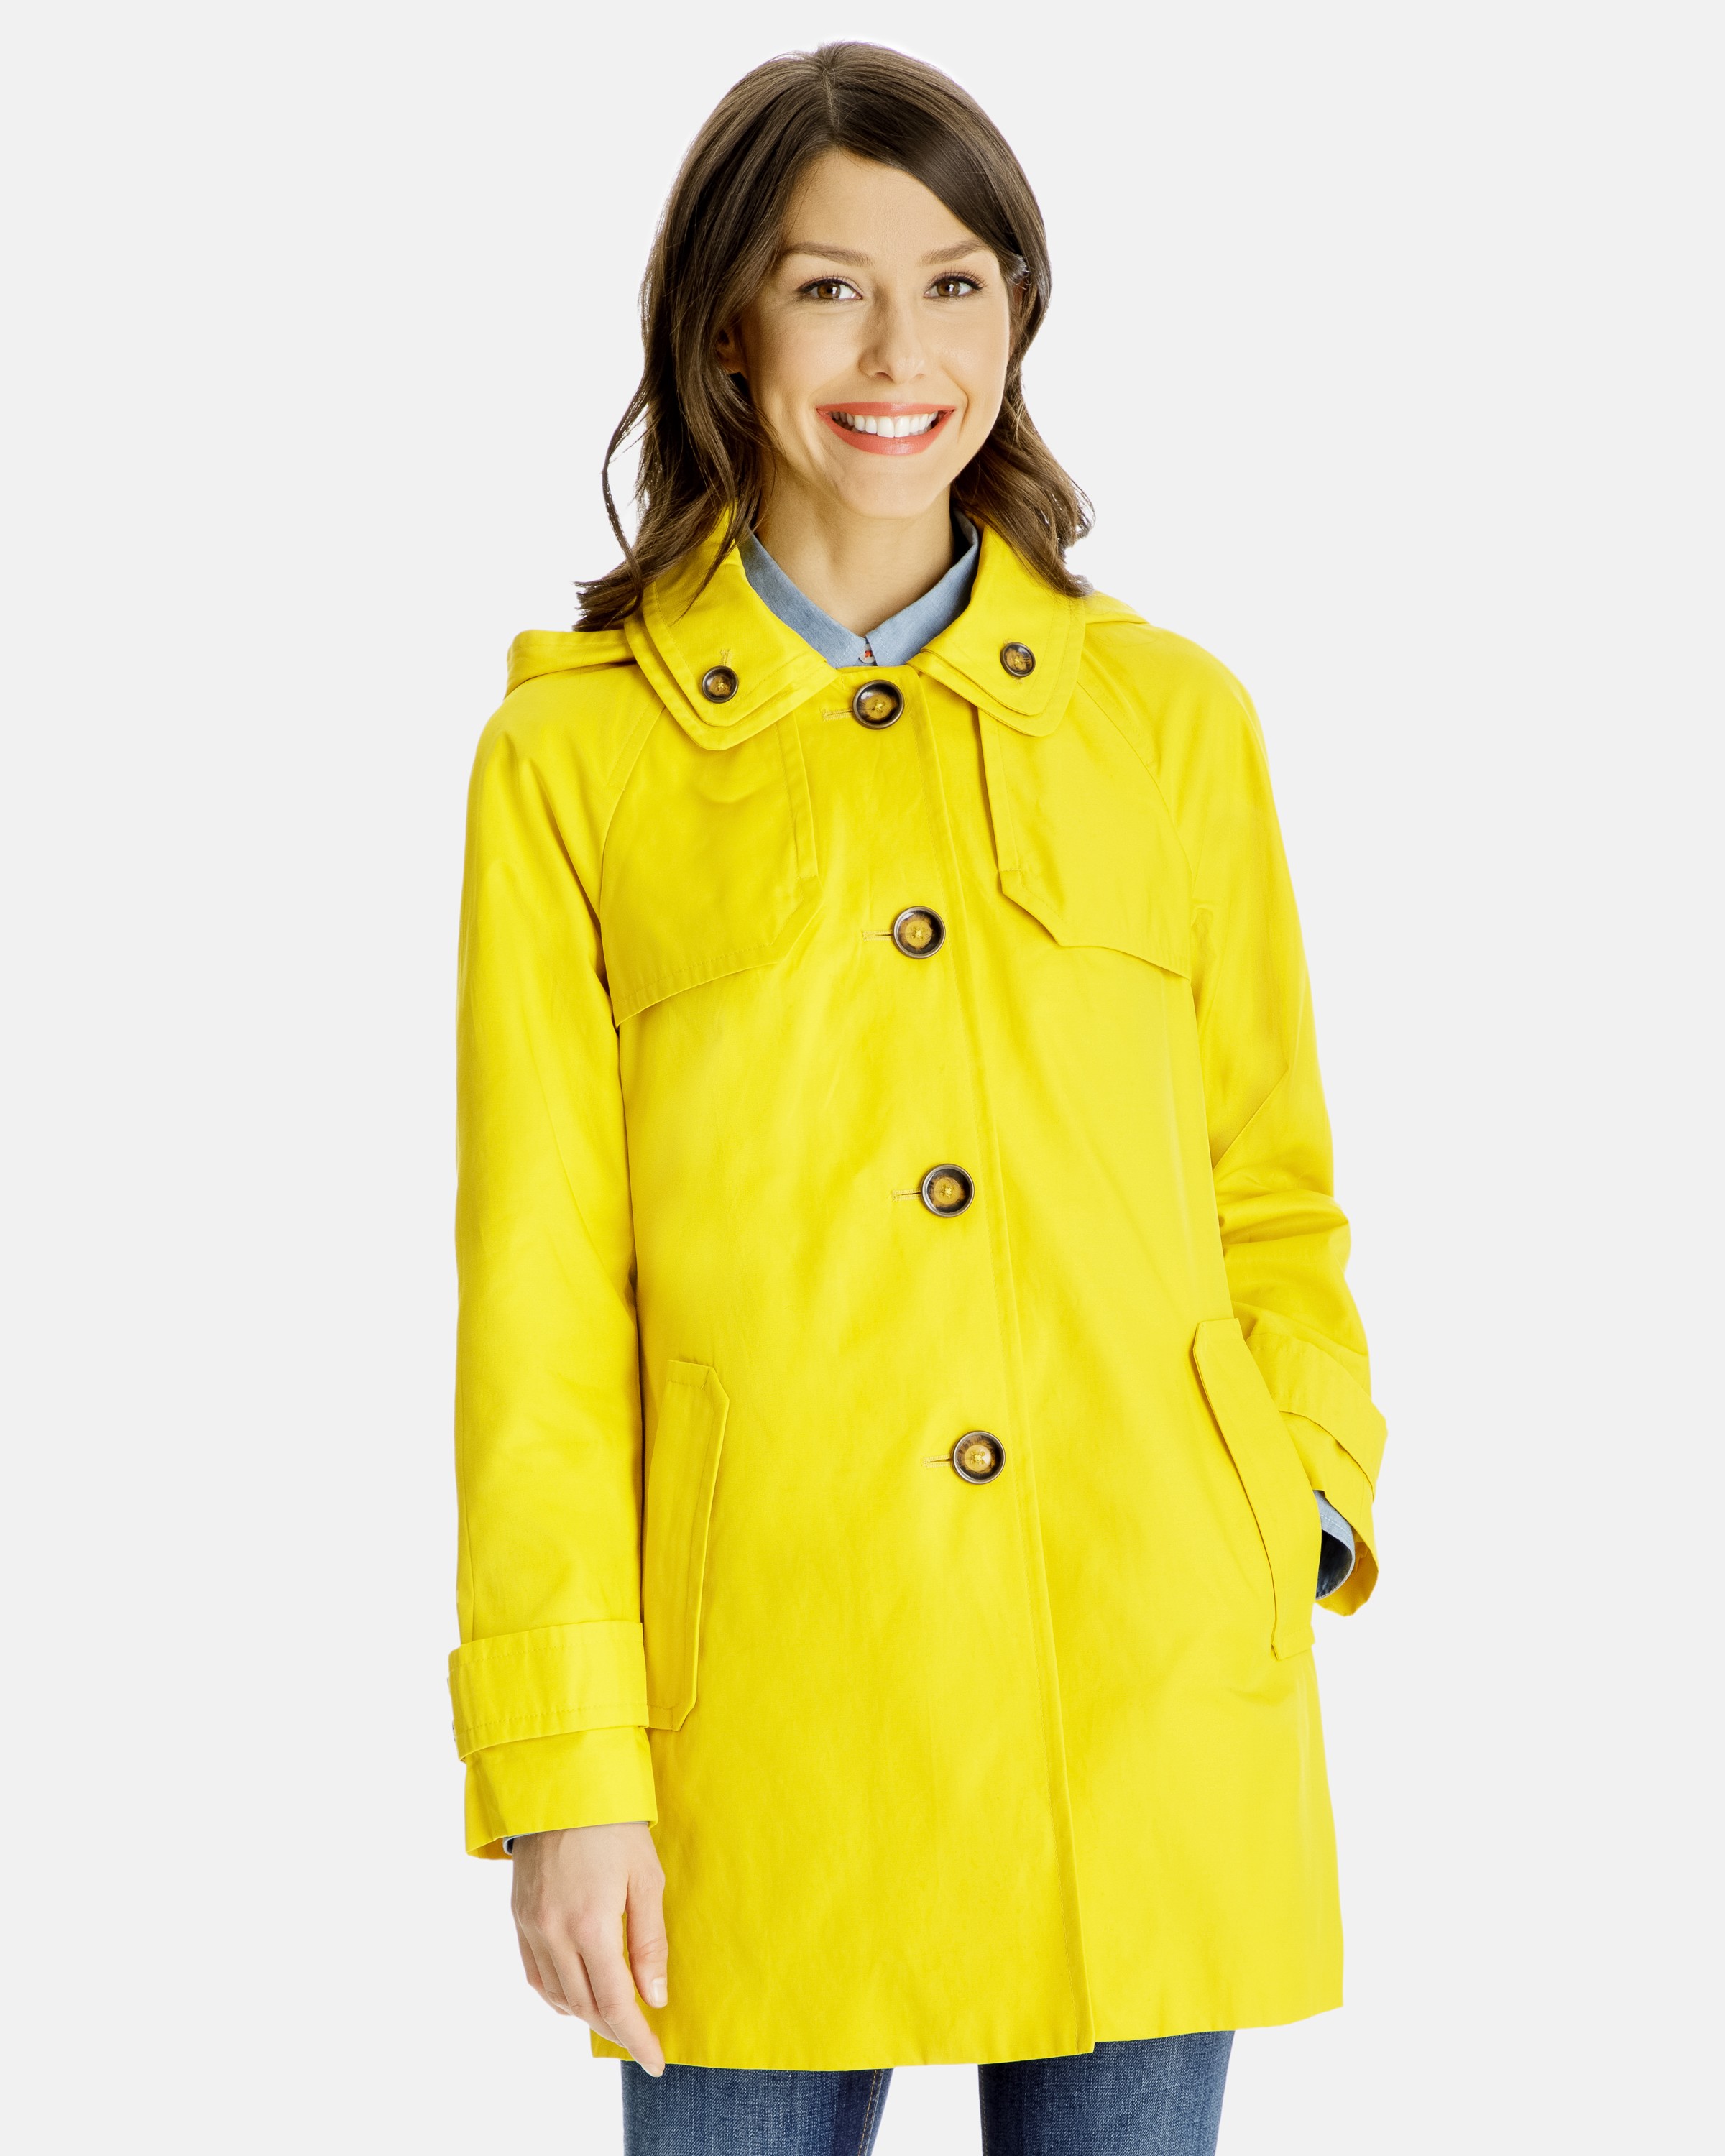 womens raincoats bridget walker coat with removable hood BRVDHAO